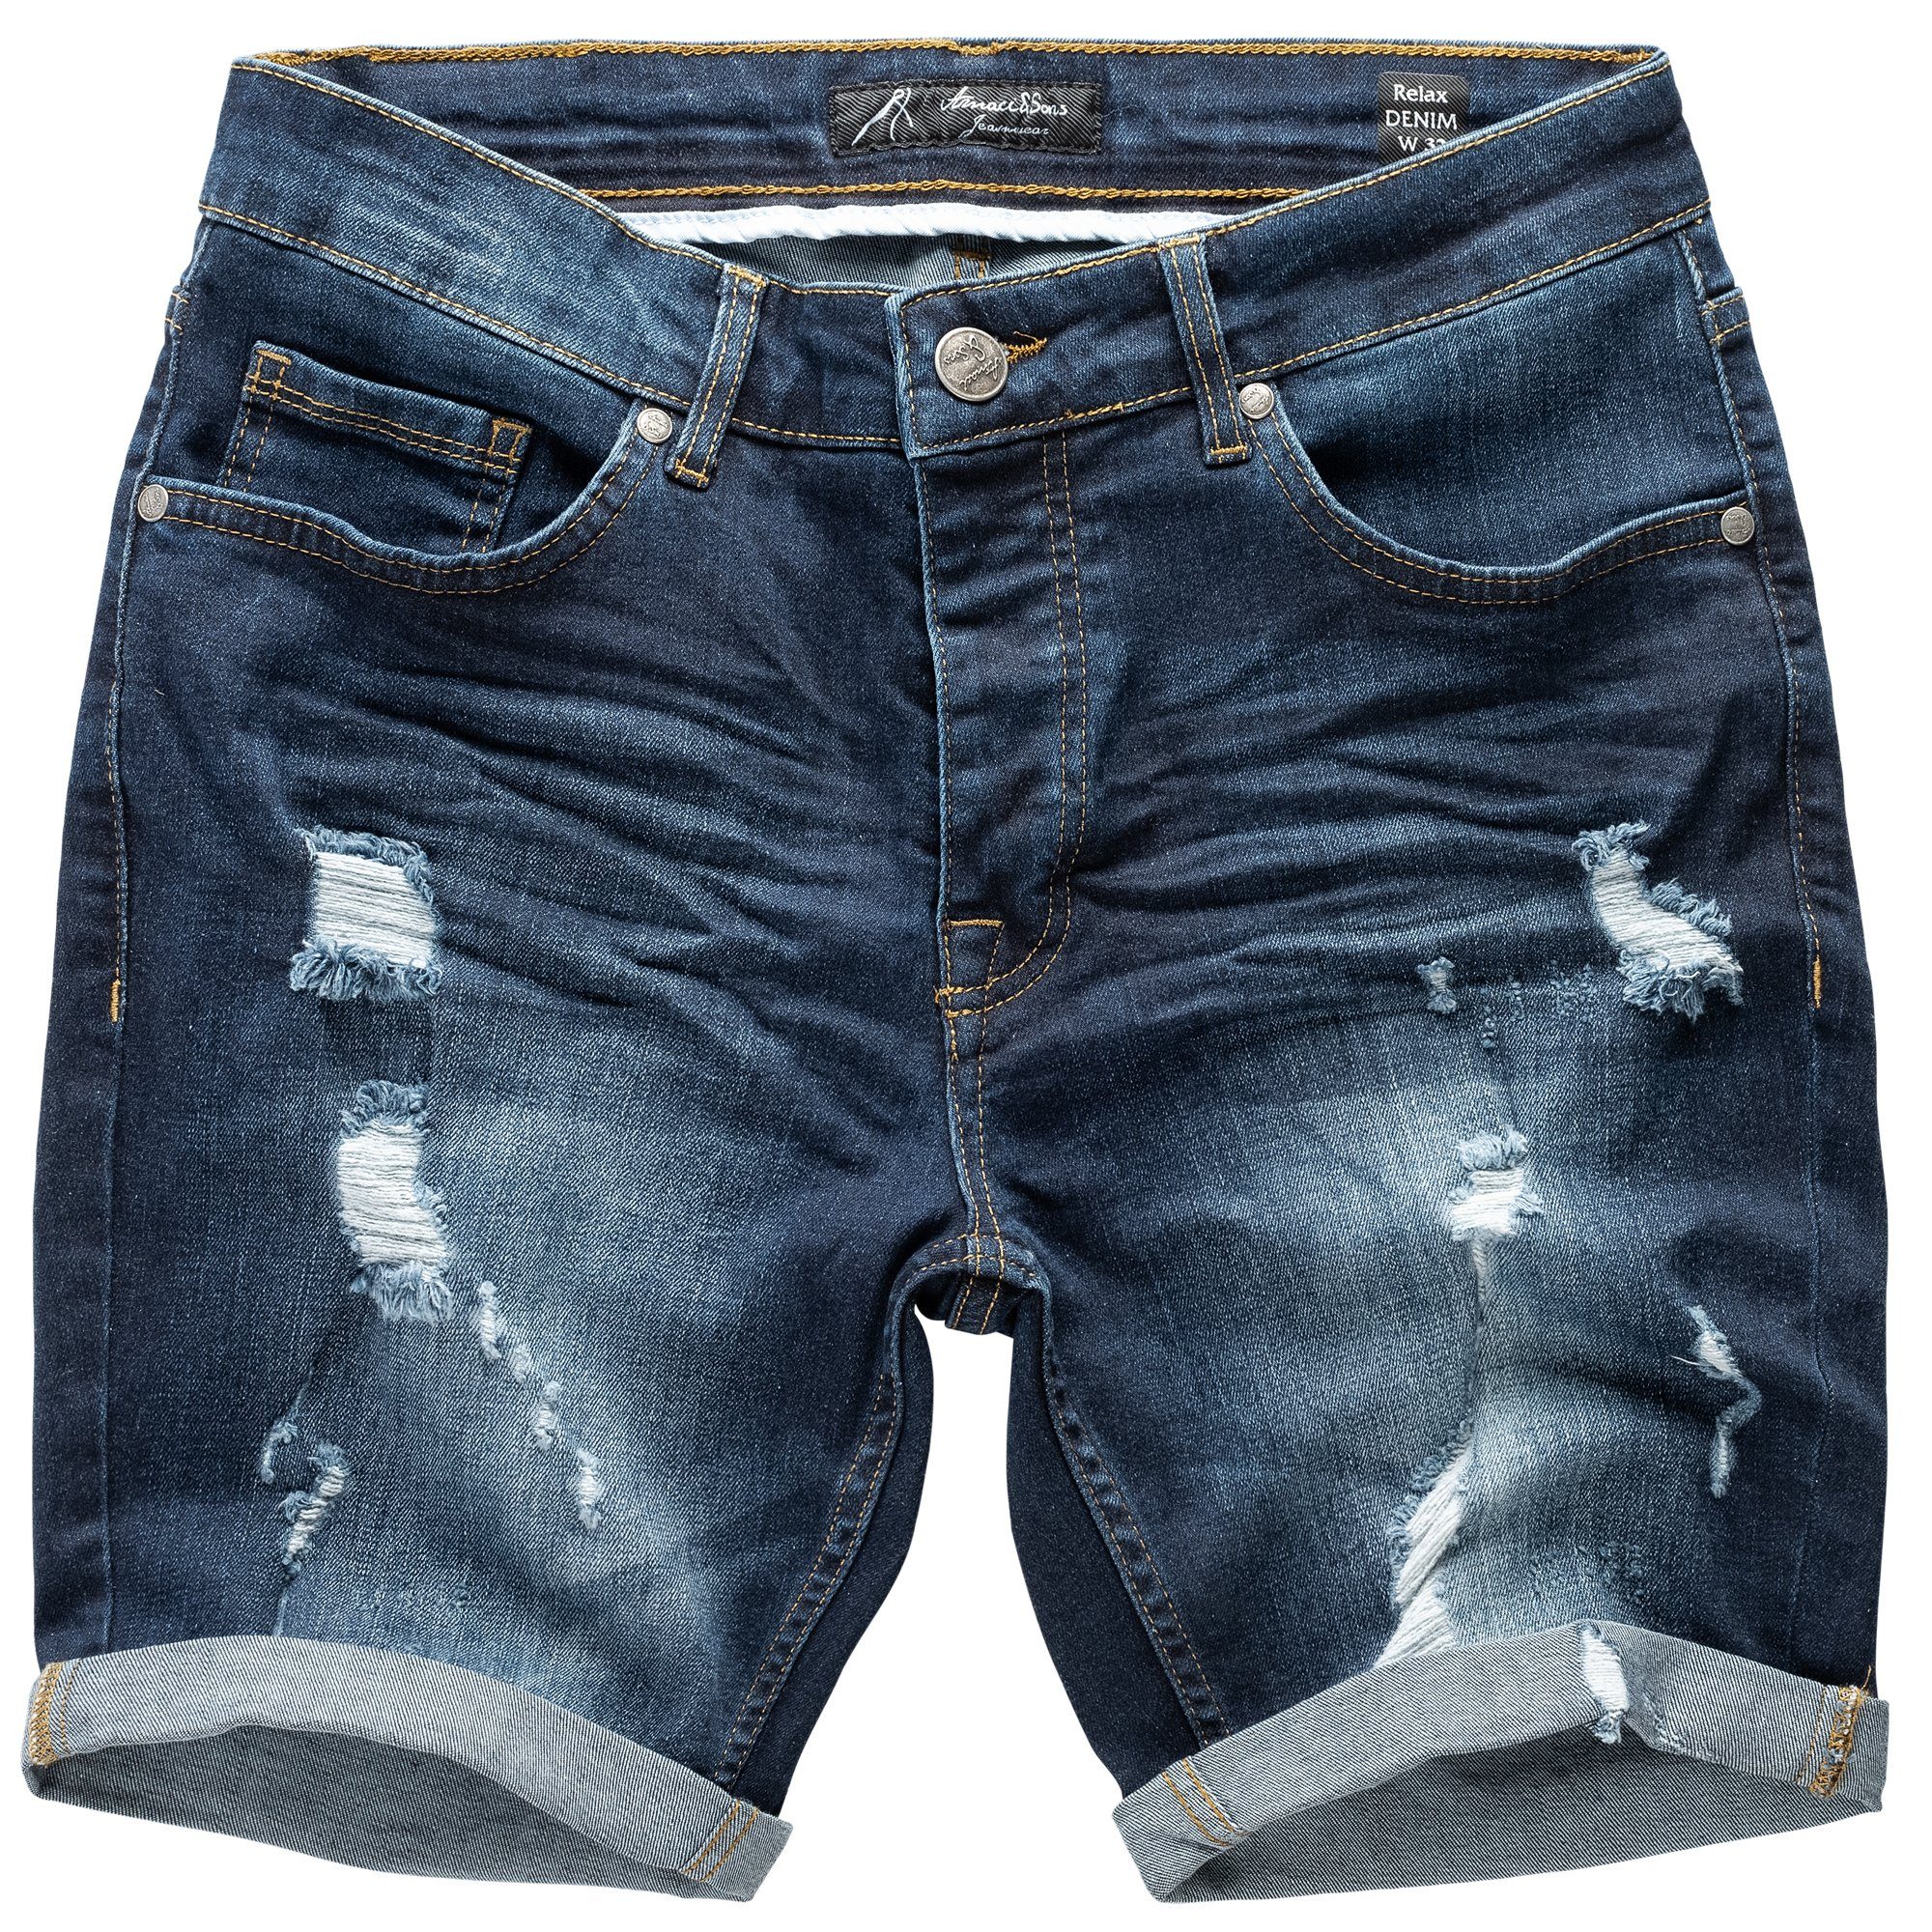 Amaci&Sons Jeansshorts SAN DIEGO Destroyed Jeans Shorts Dunkelblau